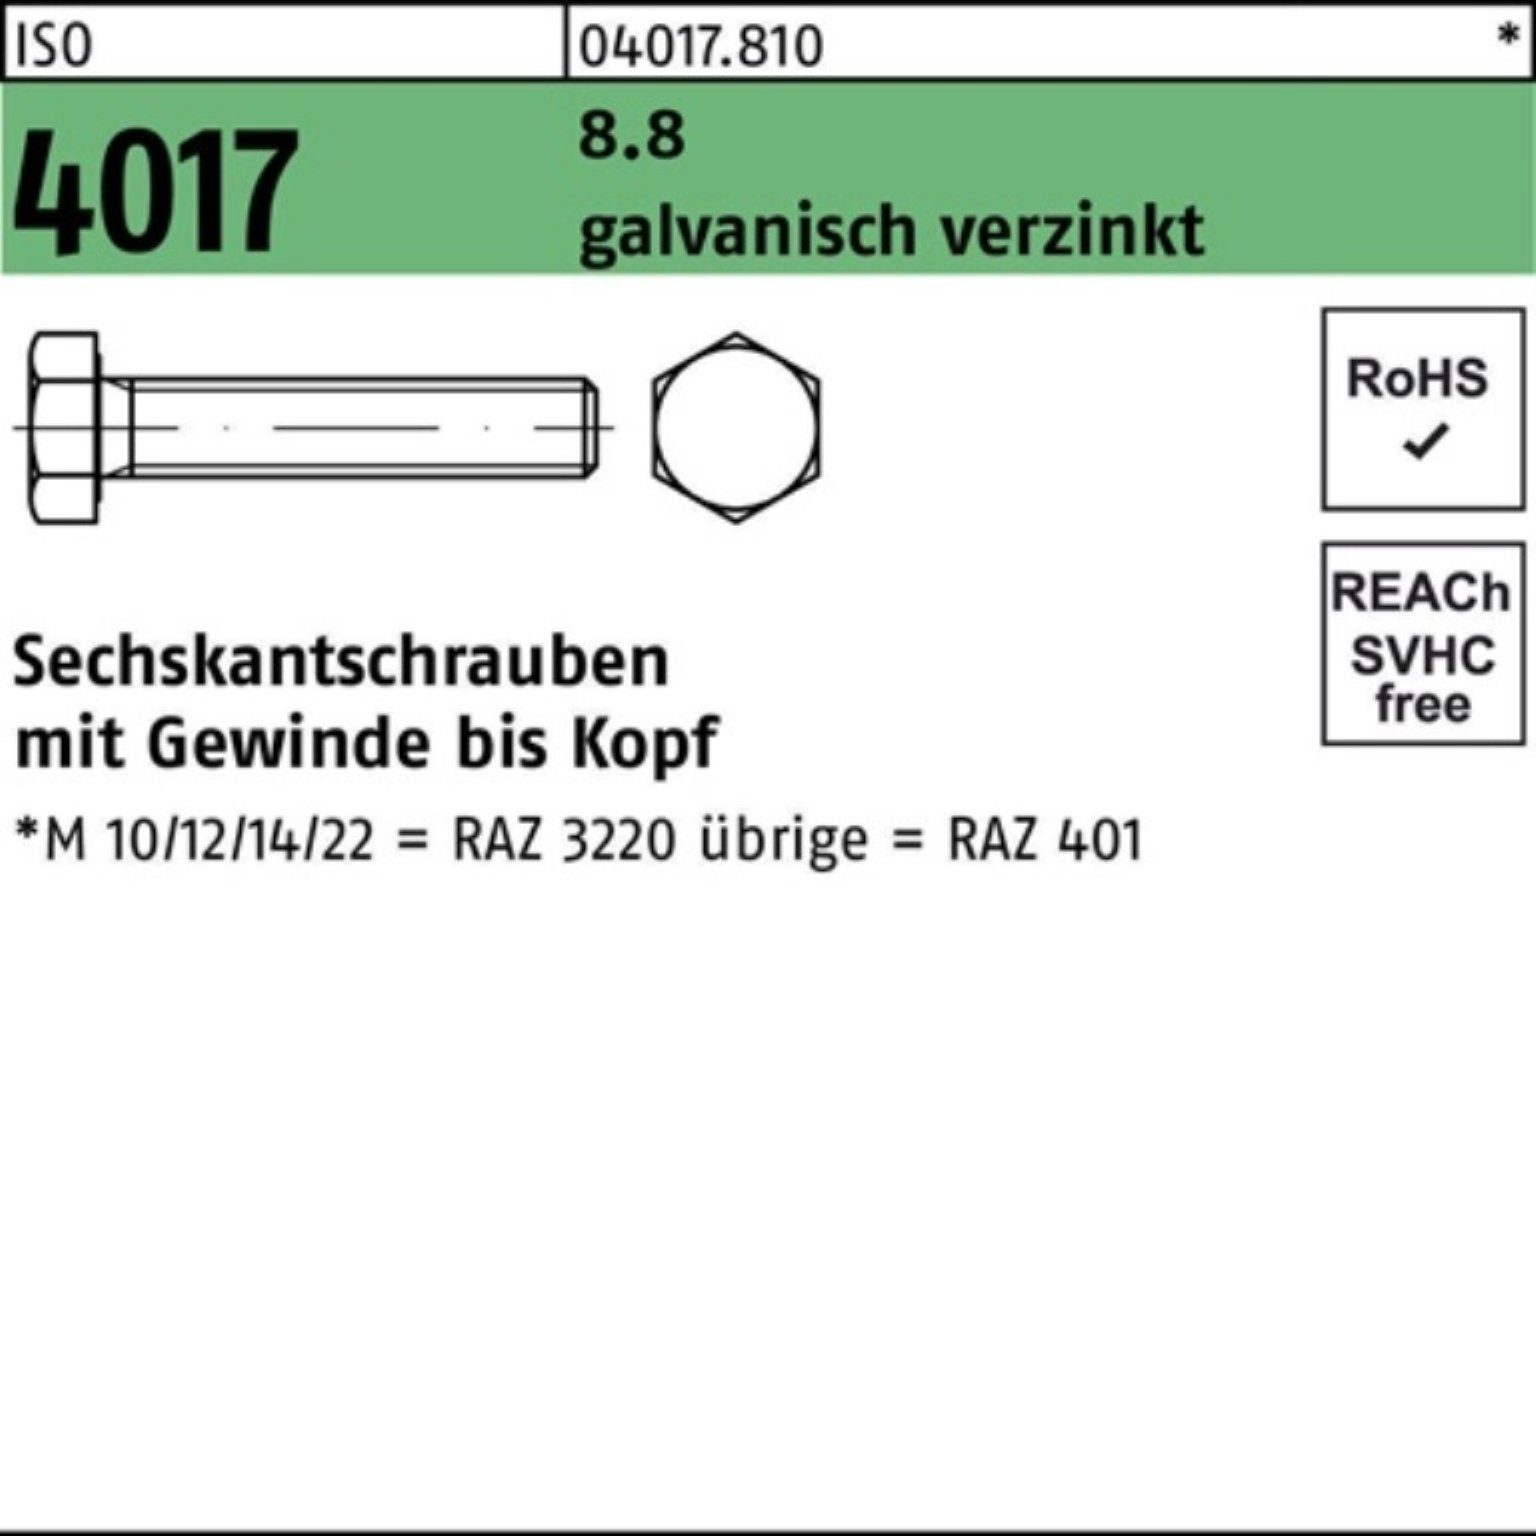 Bufab Sechskantschraube 100er Pack Sechskantschraube 190 galv.verz. 1 4017 St VG M36x 8.8 ISO